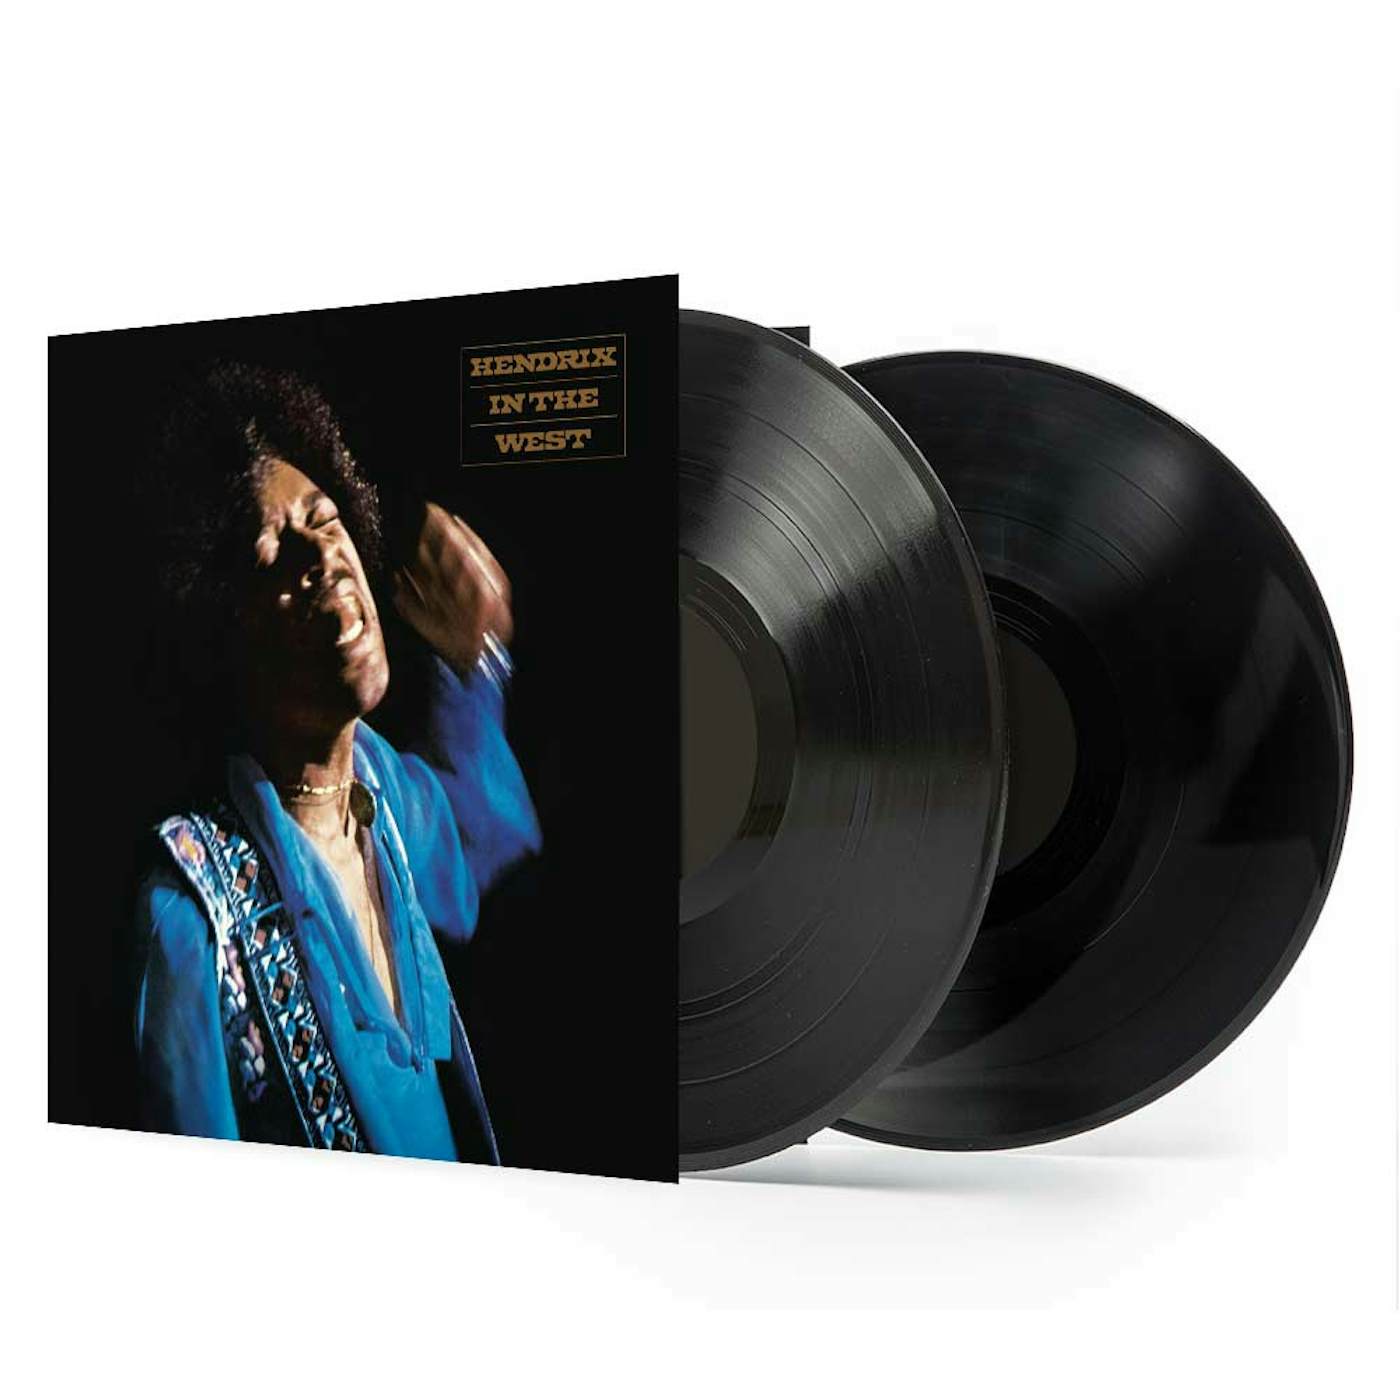 Jimi Hendrix Hendrix In The West Vinyl Record